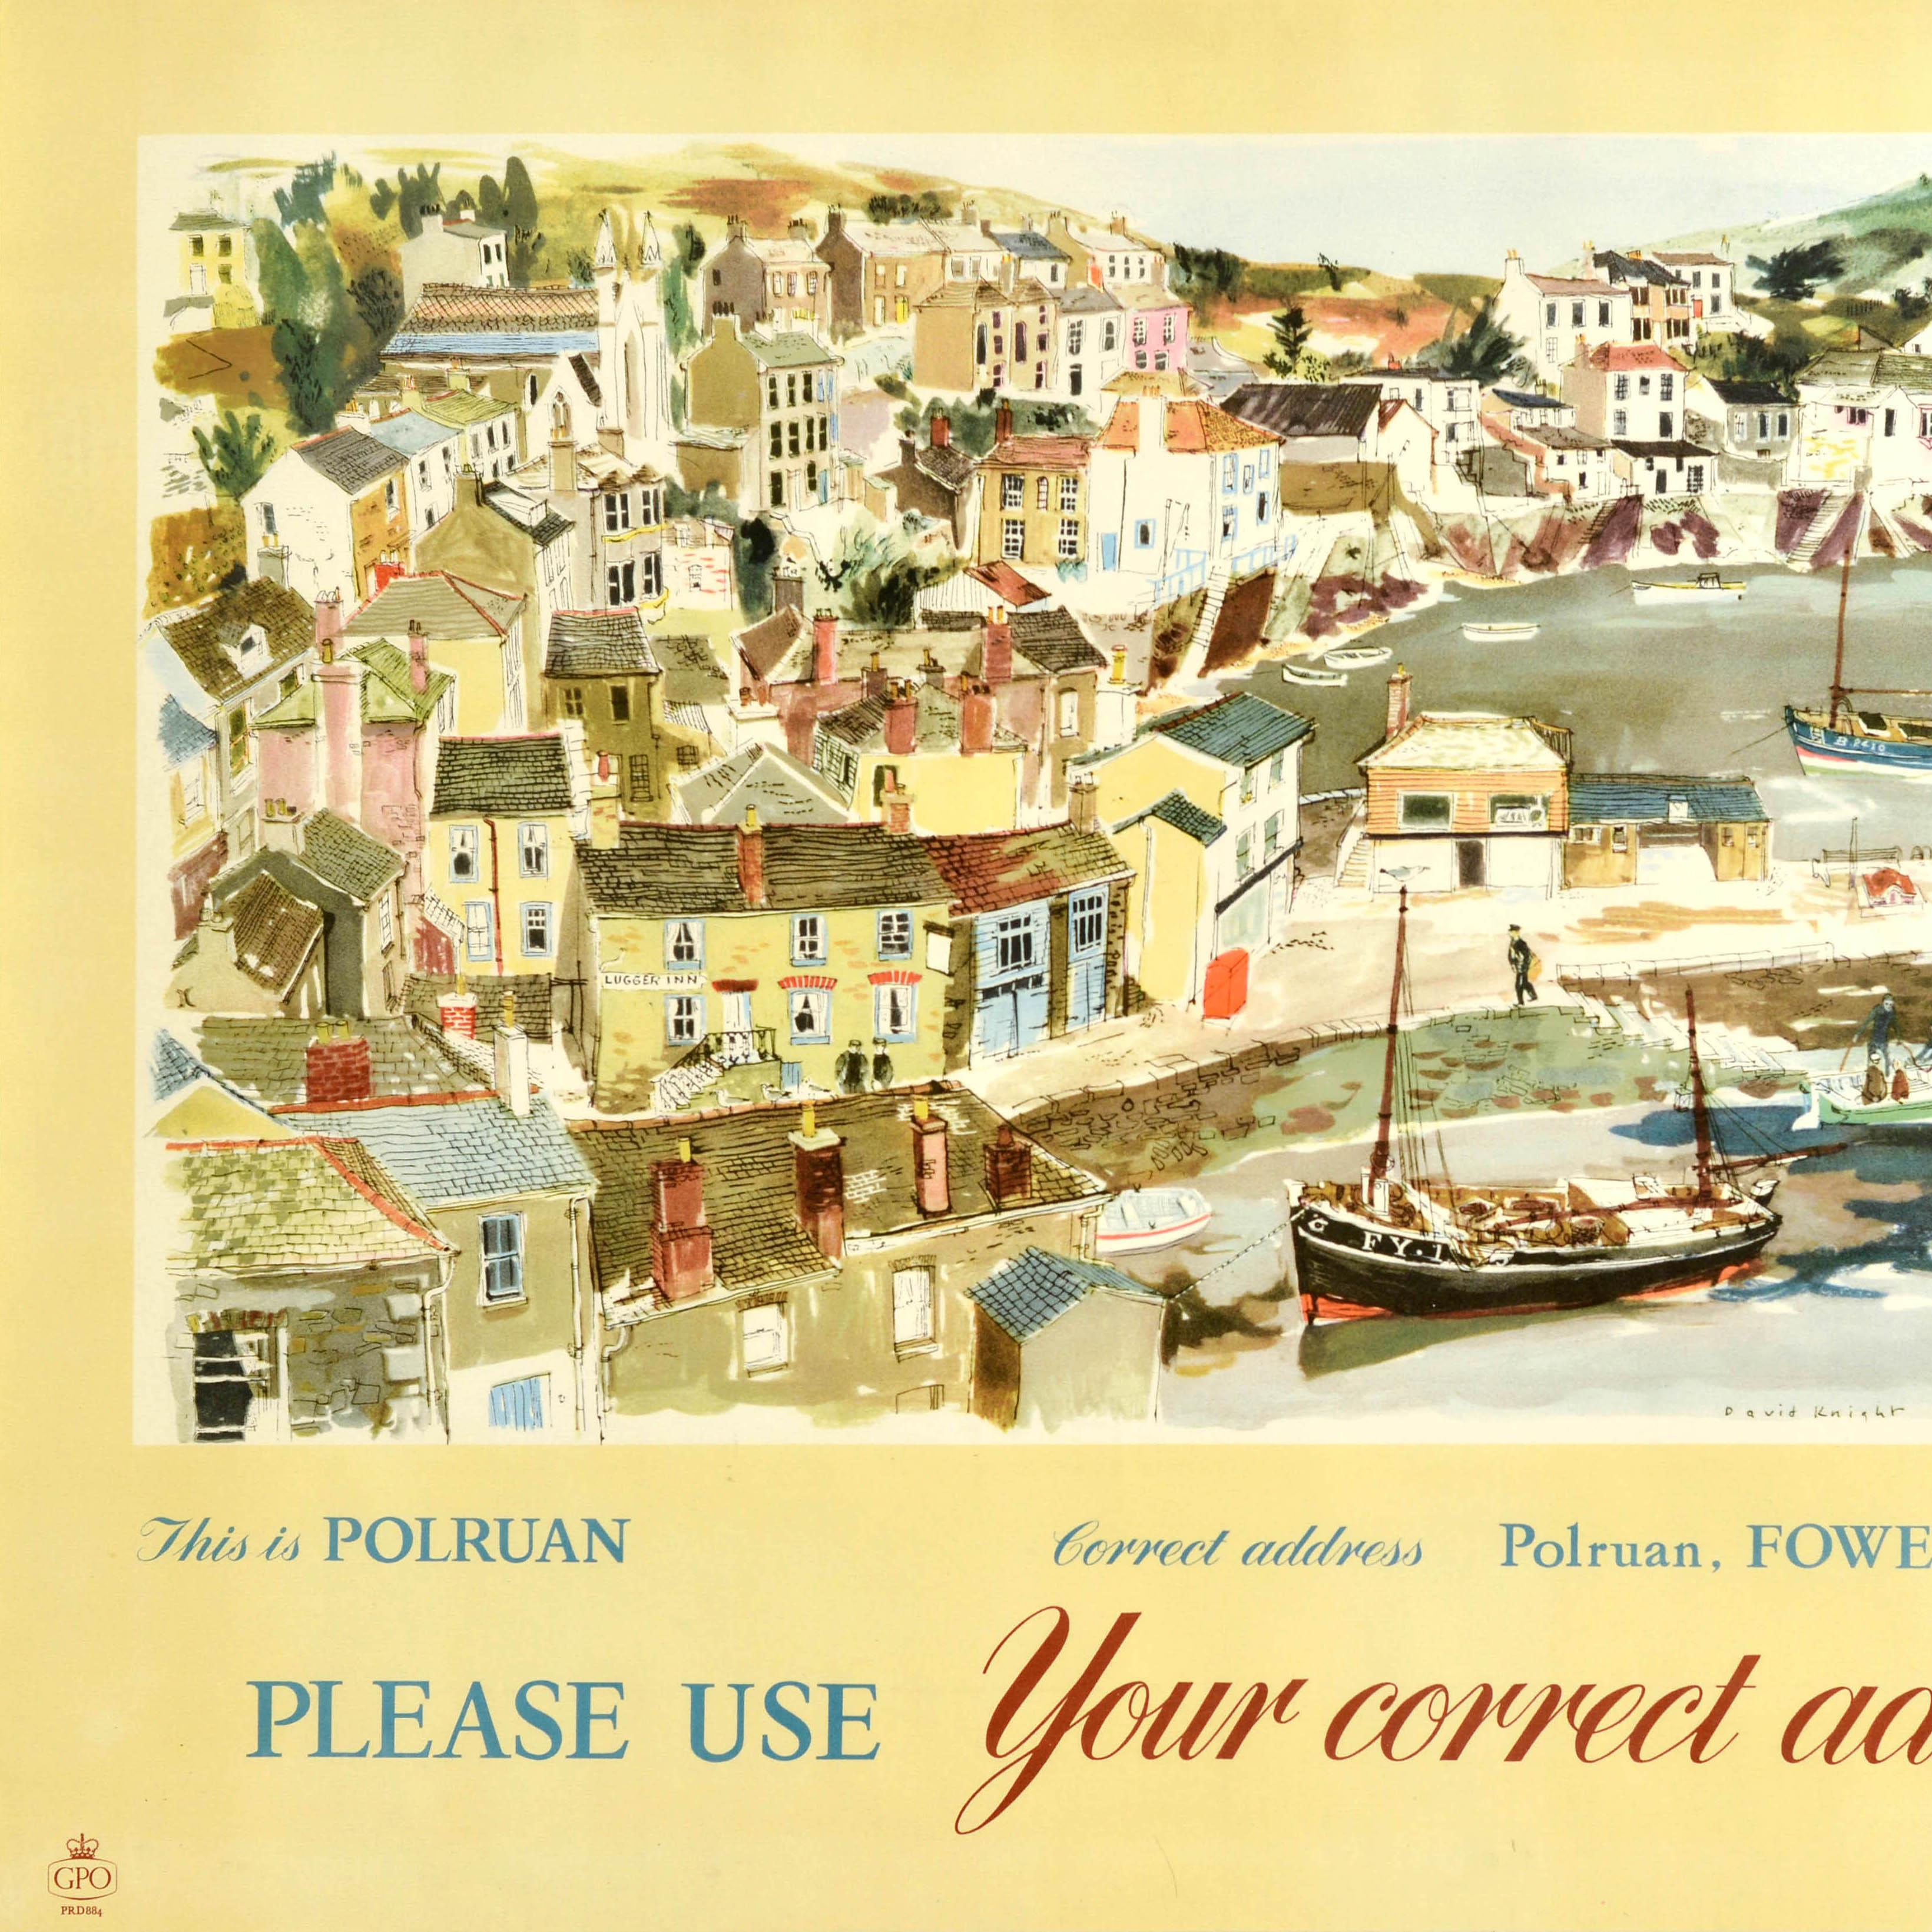 Original Vintage Post Office Advertising Poster Polruan Fowey Cornwall GPO UK - Orange Print by David Knight